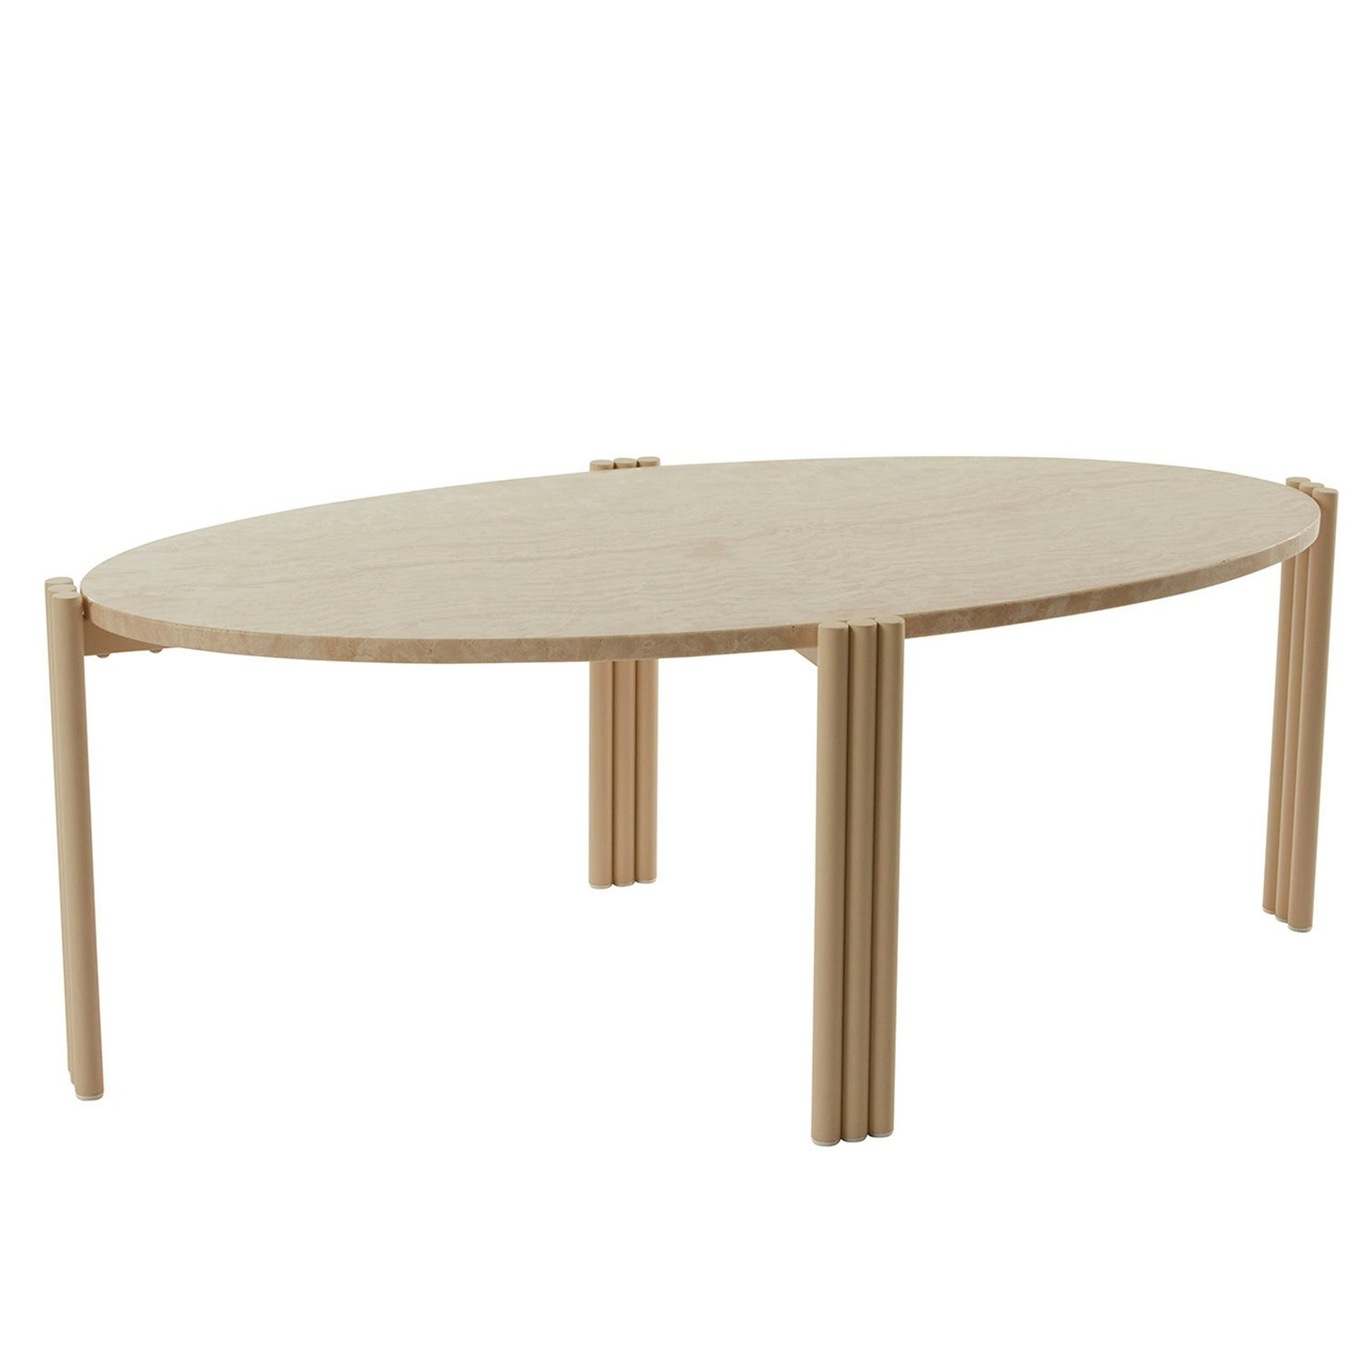 Tribus Coffee Table Oval, Travertine/Sand